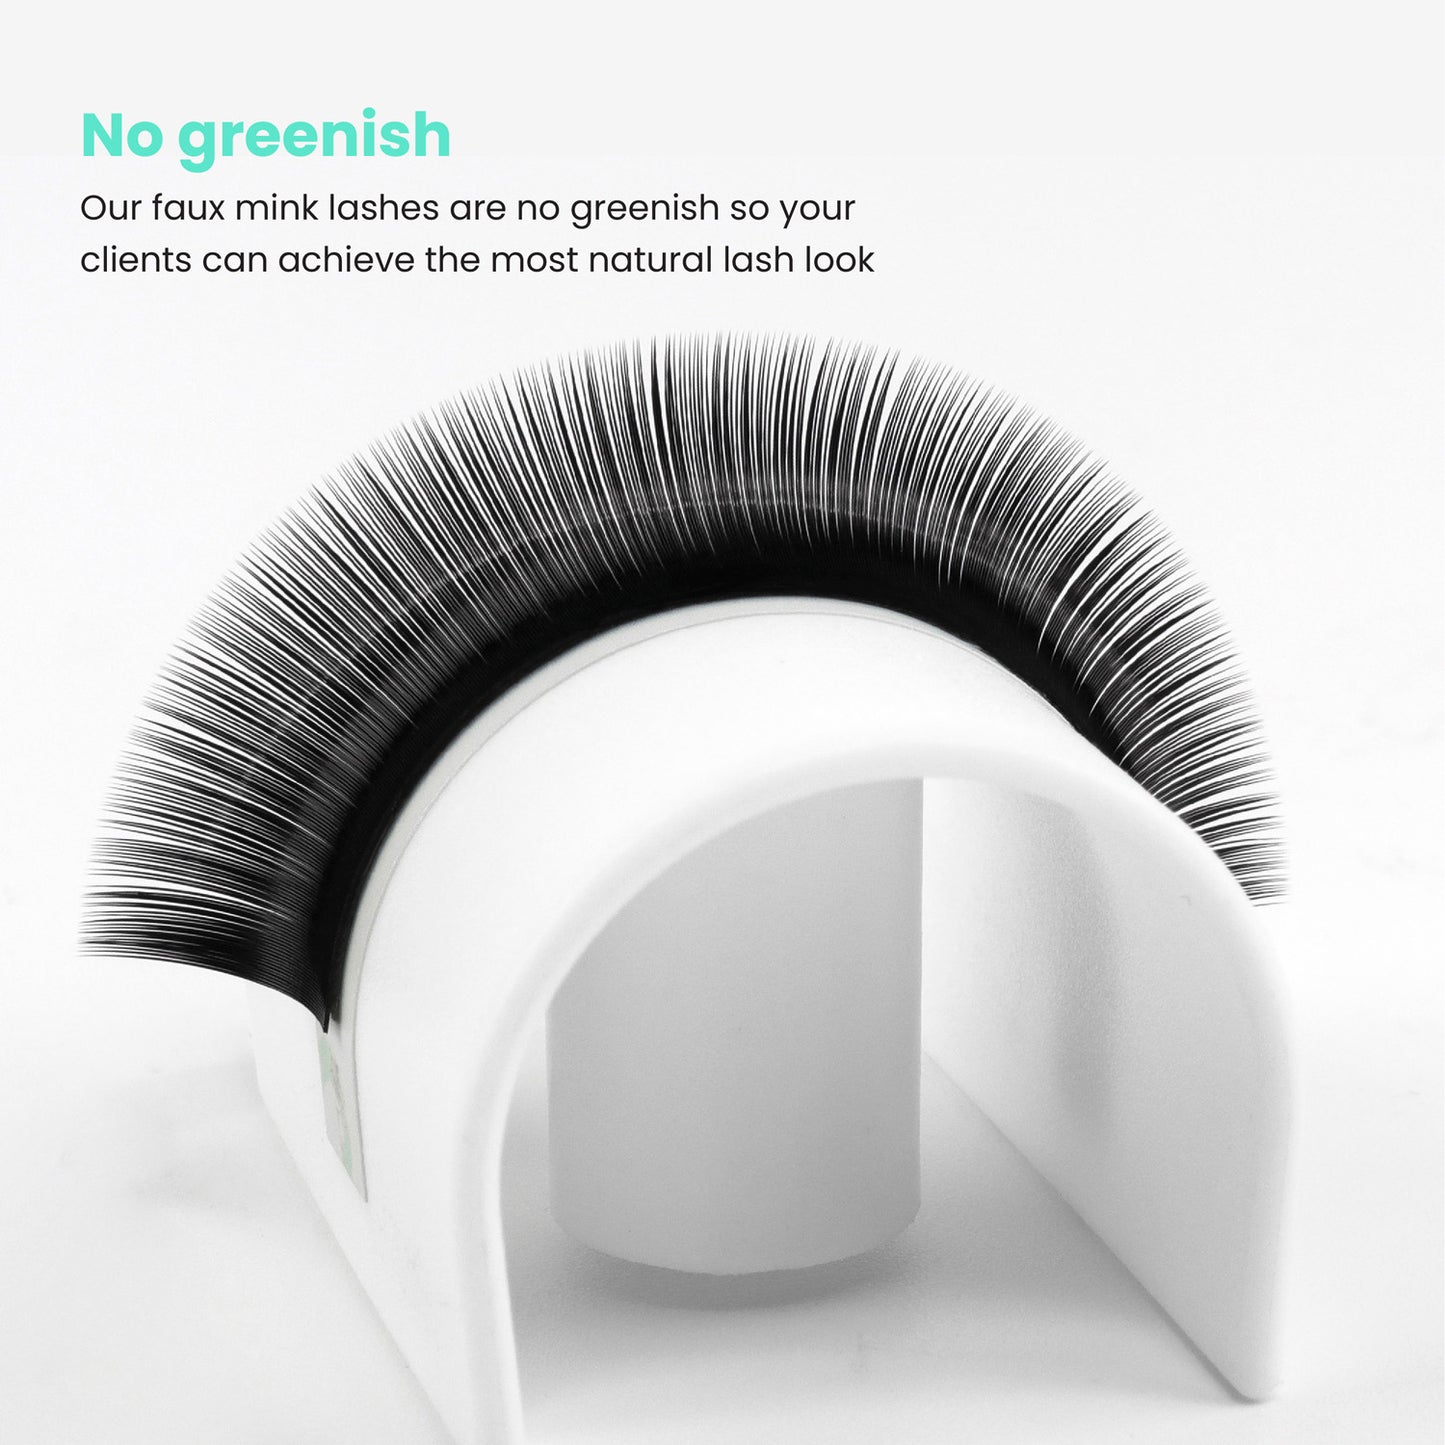 Faux-mink-classic-lashes-0.18mm-no-greenish